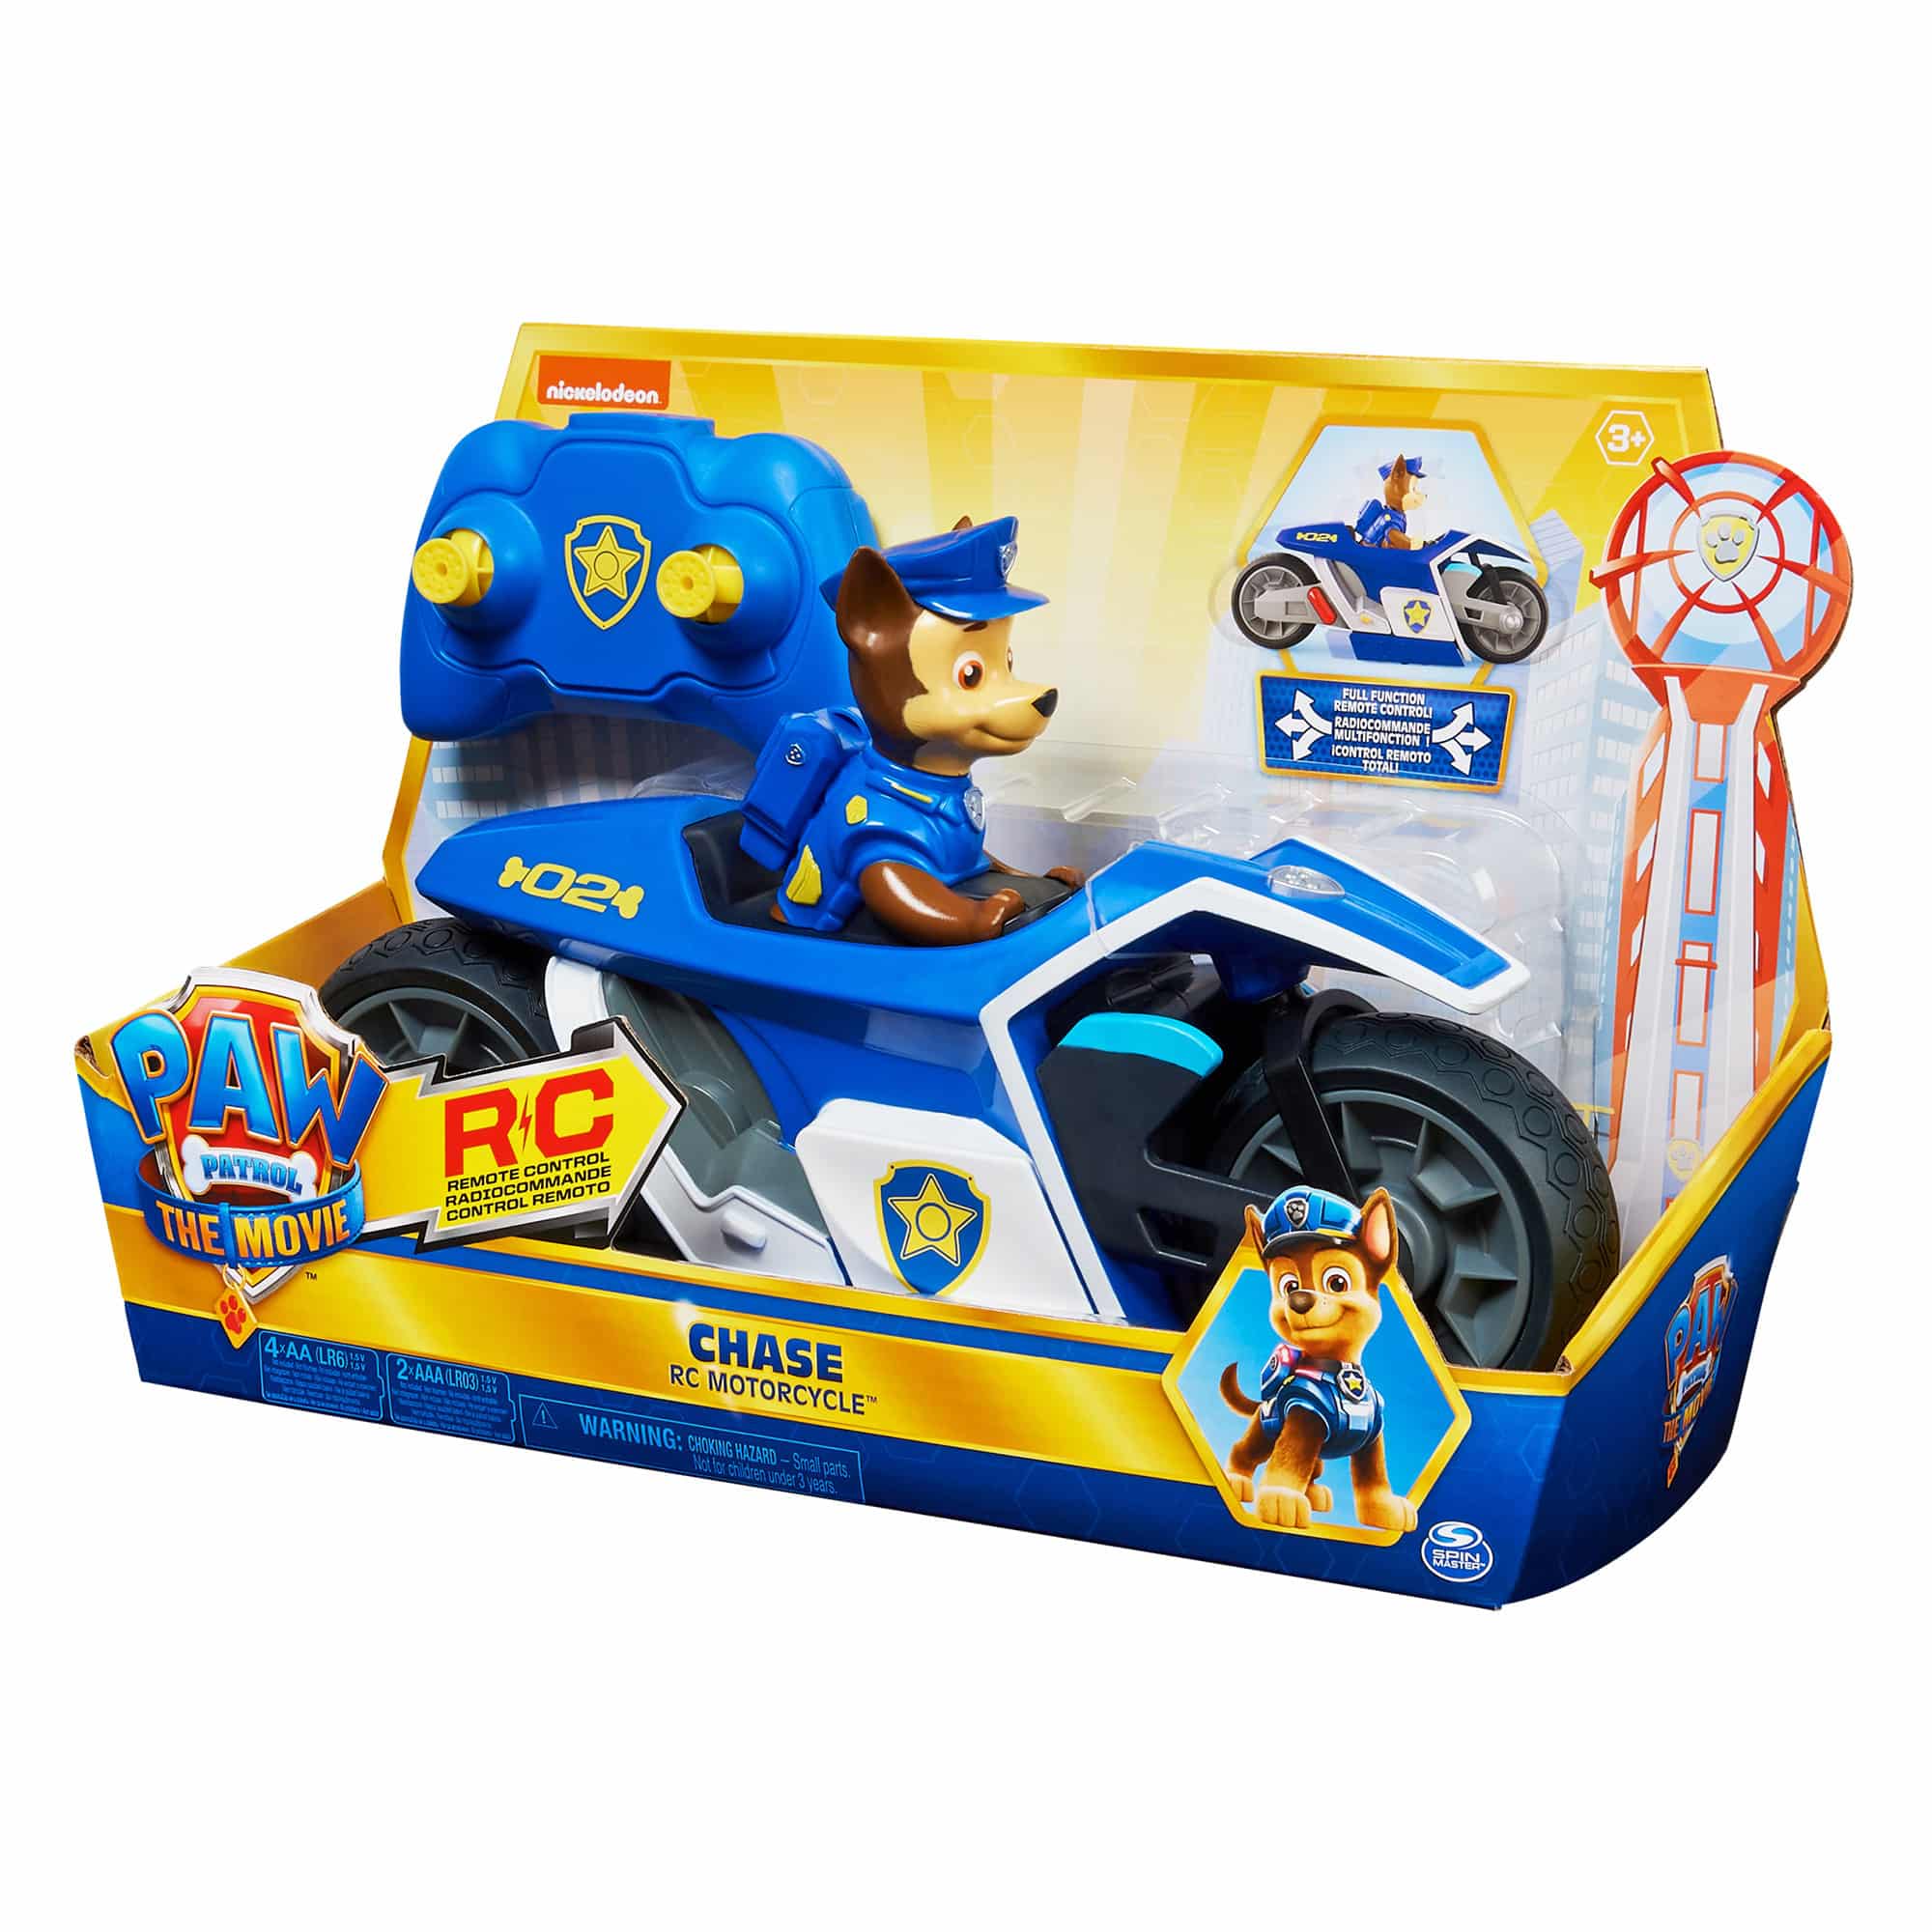 Nickelodeon - Paw Patrol - Chase RC Motorcycle